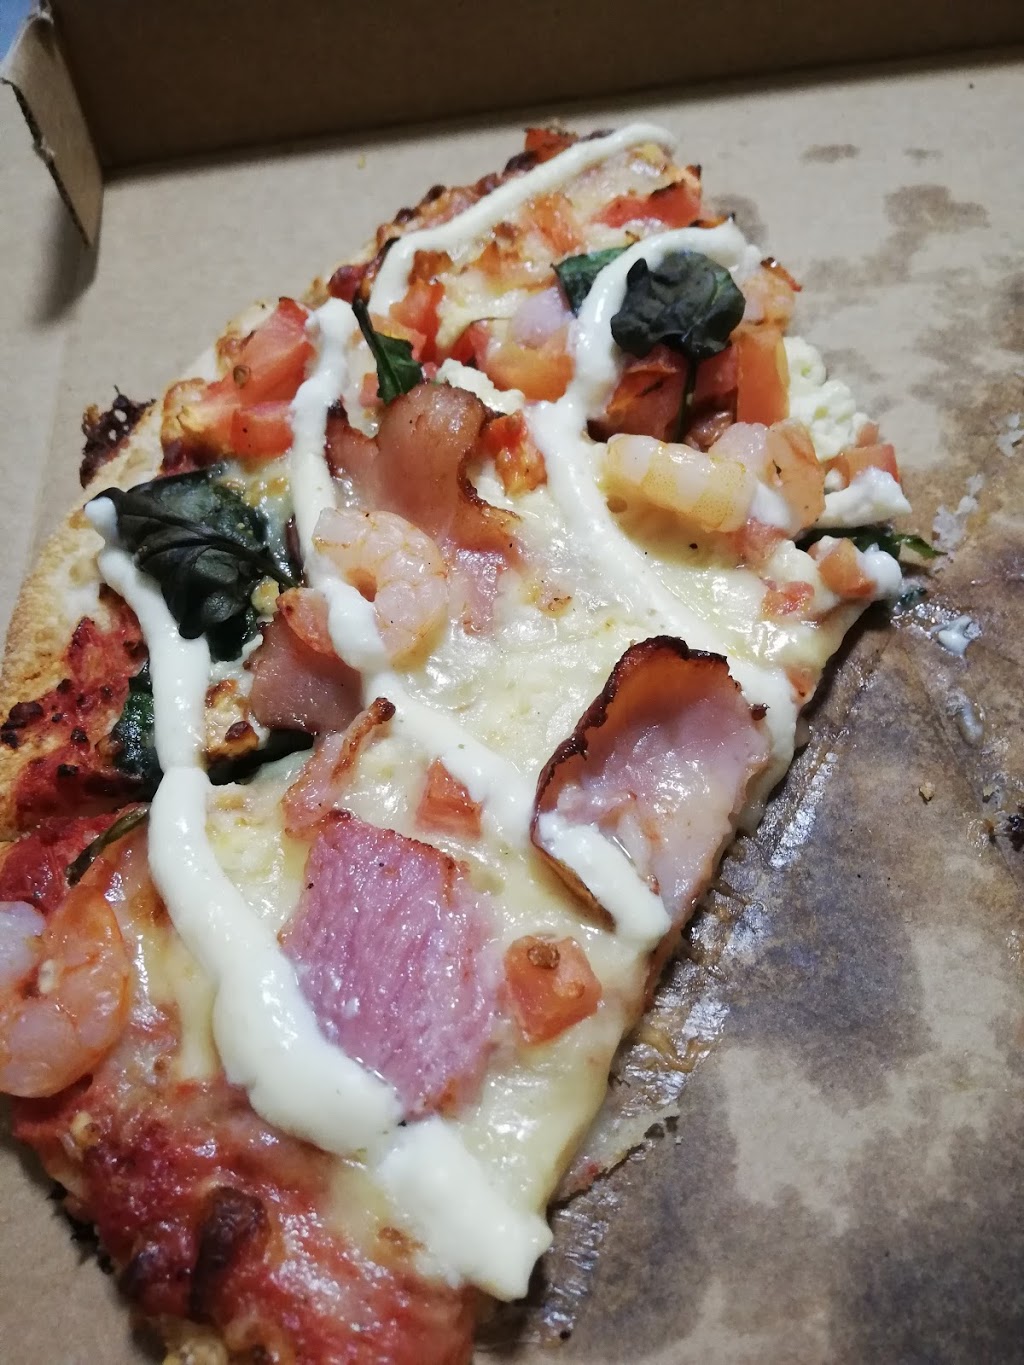 Zannies Pizzas | 56A Elbow St, West Kempsey NSW 2440, Australia | Phone: 1300 926 643